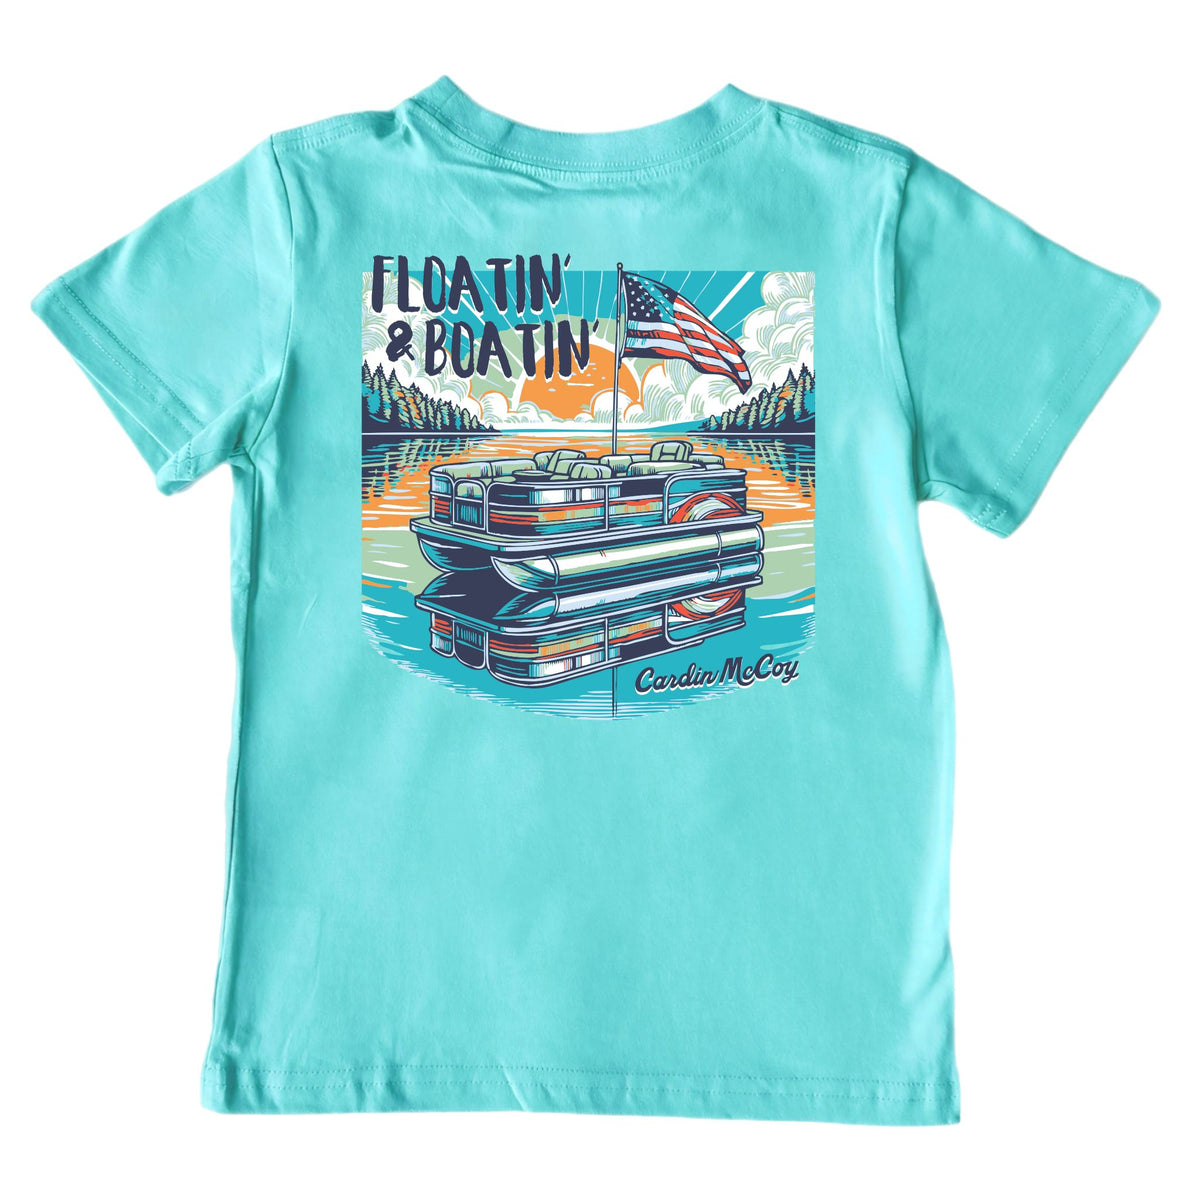 Kids' Floatin' and Boatin' Short-Sleeve Tee Short Sleeve T-Shirt Cardin McCoy Teal XXS (2/3) Pocket